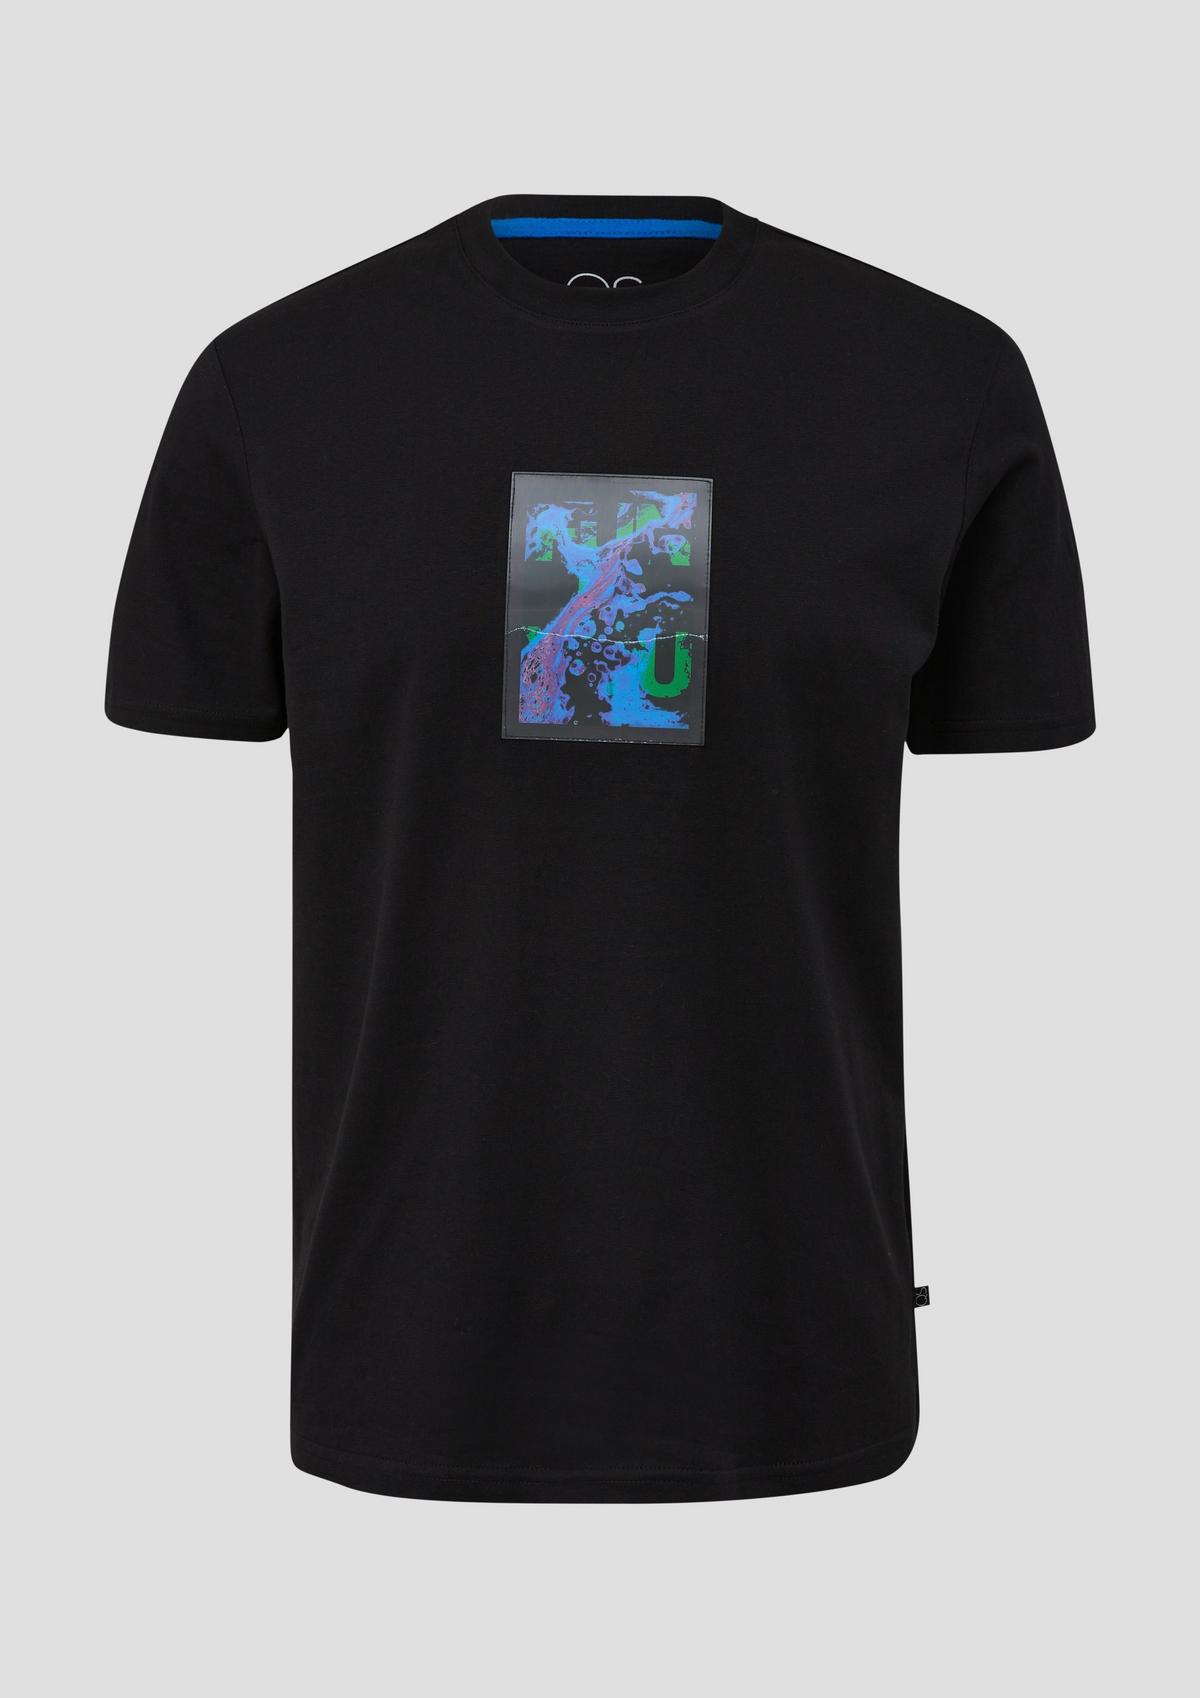 s.Oliver Shirt mit Hologramm-Patch